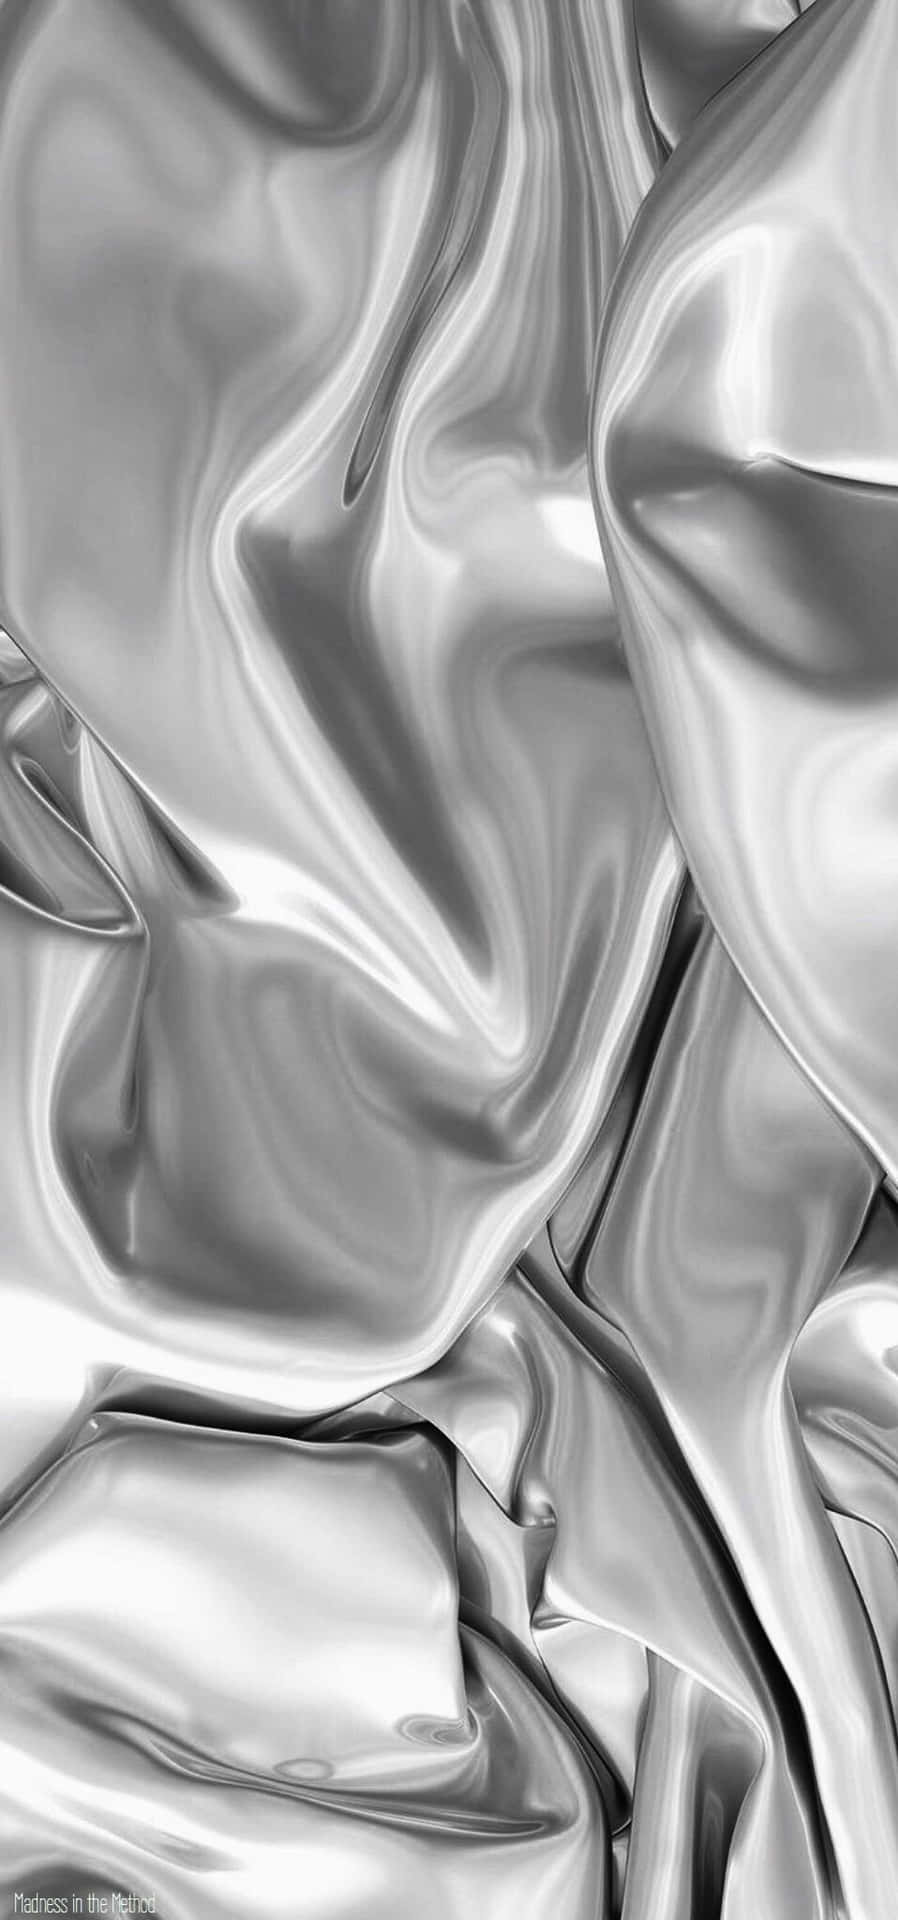 Silver Fluid Aesthetic.jpg Wallpaper